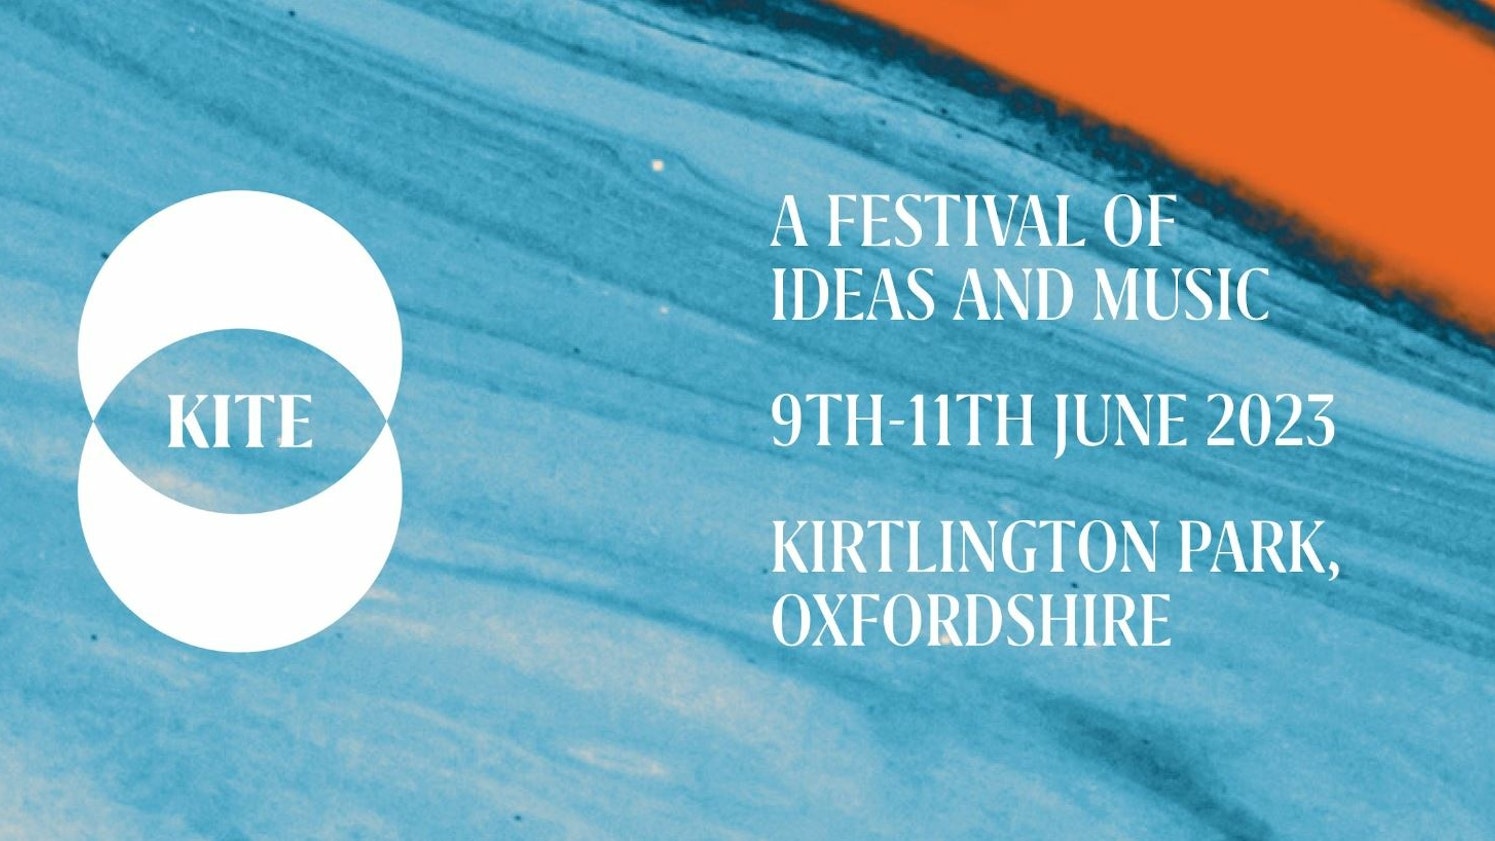 KITE Festival 2023 Tickets at Kirtlington Park on 9th June 2023 | Ents24